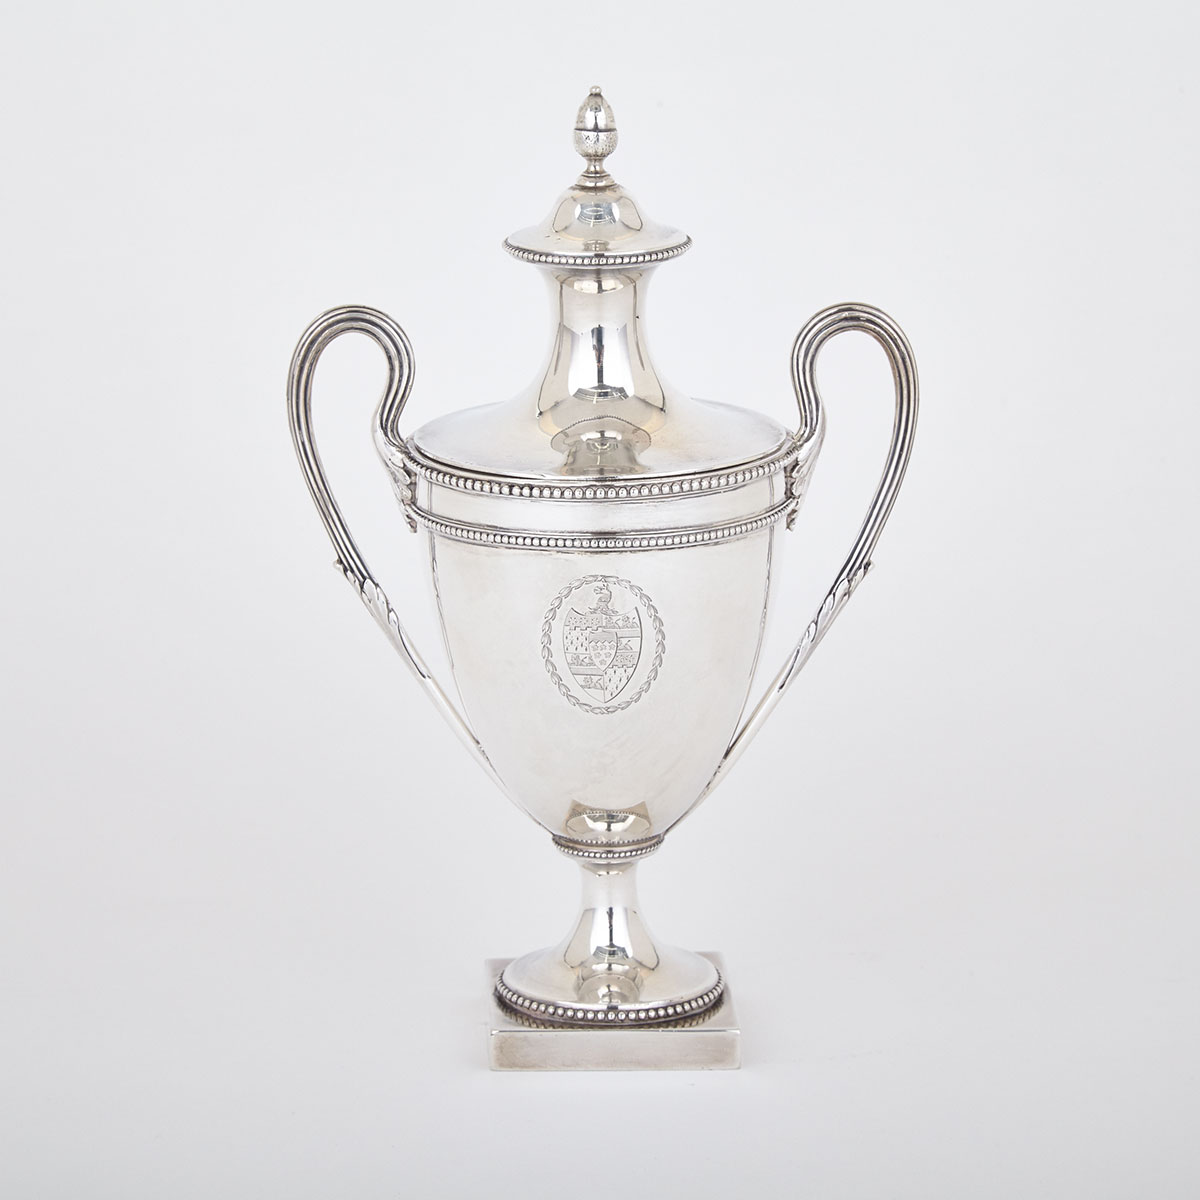 George III Silver Sugar Vase, Richard Carter, Daniel Smith & Robert Sharp, London, 1778